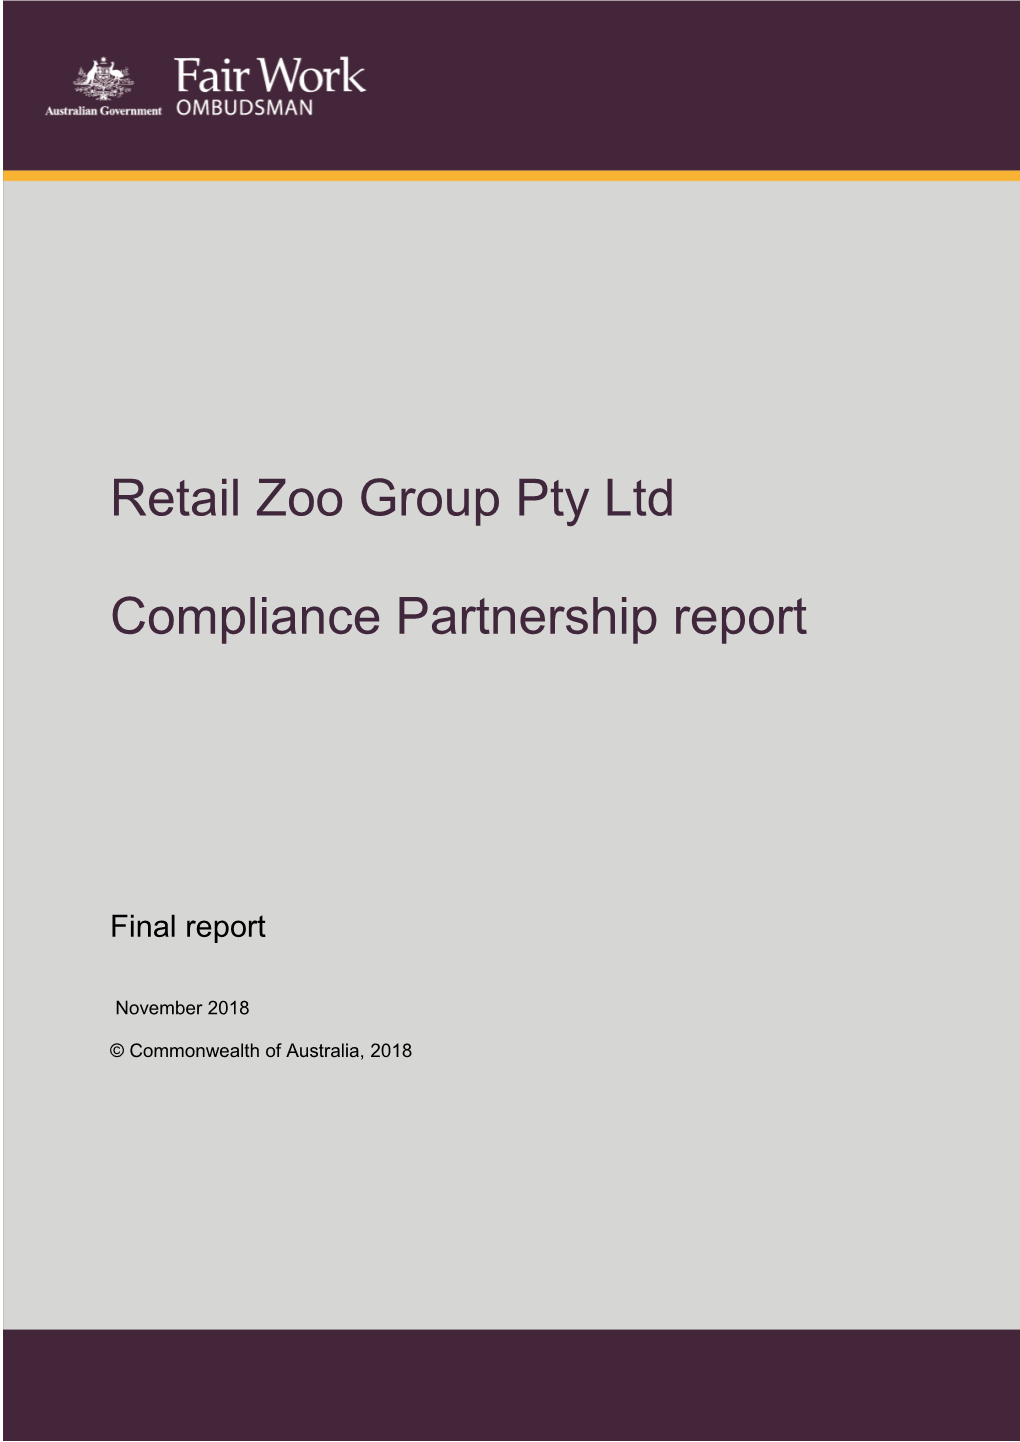 Retail Zoo Group Pty Ltd Compliance Partnership Report